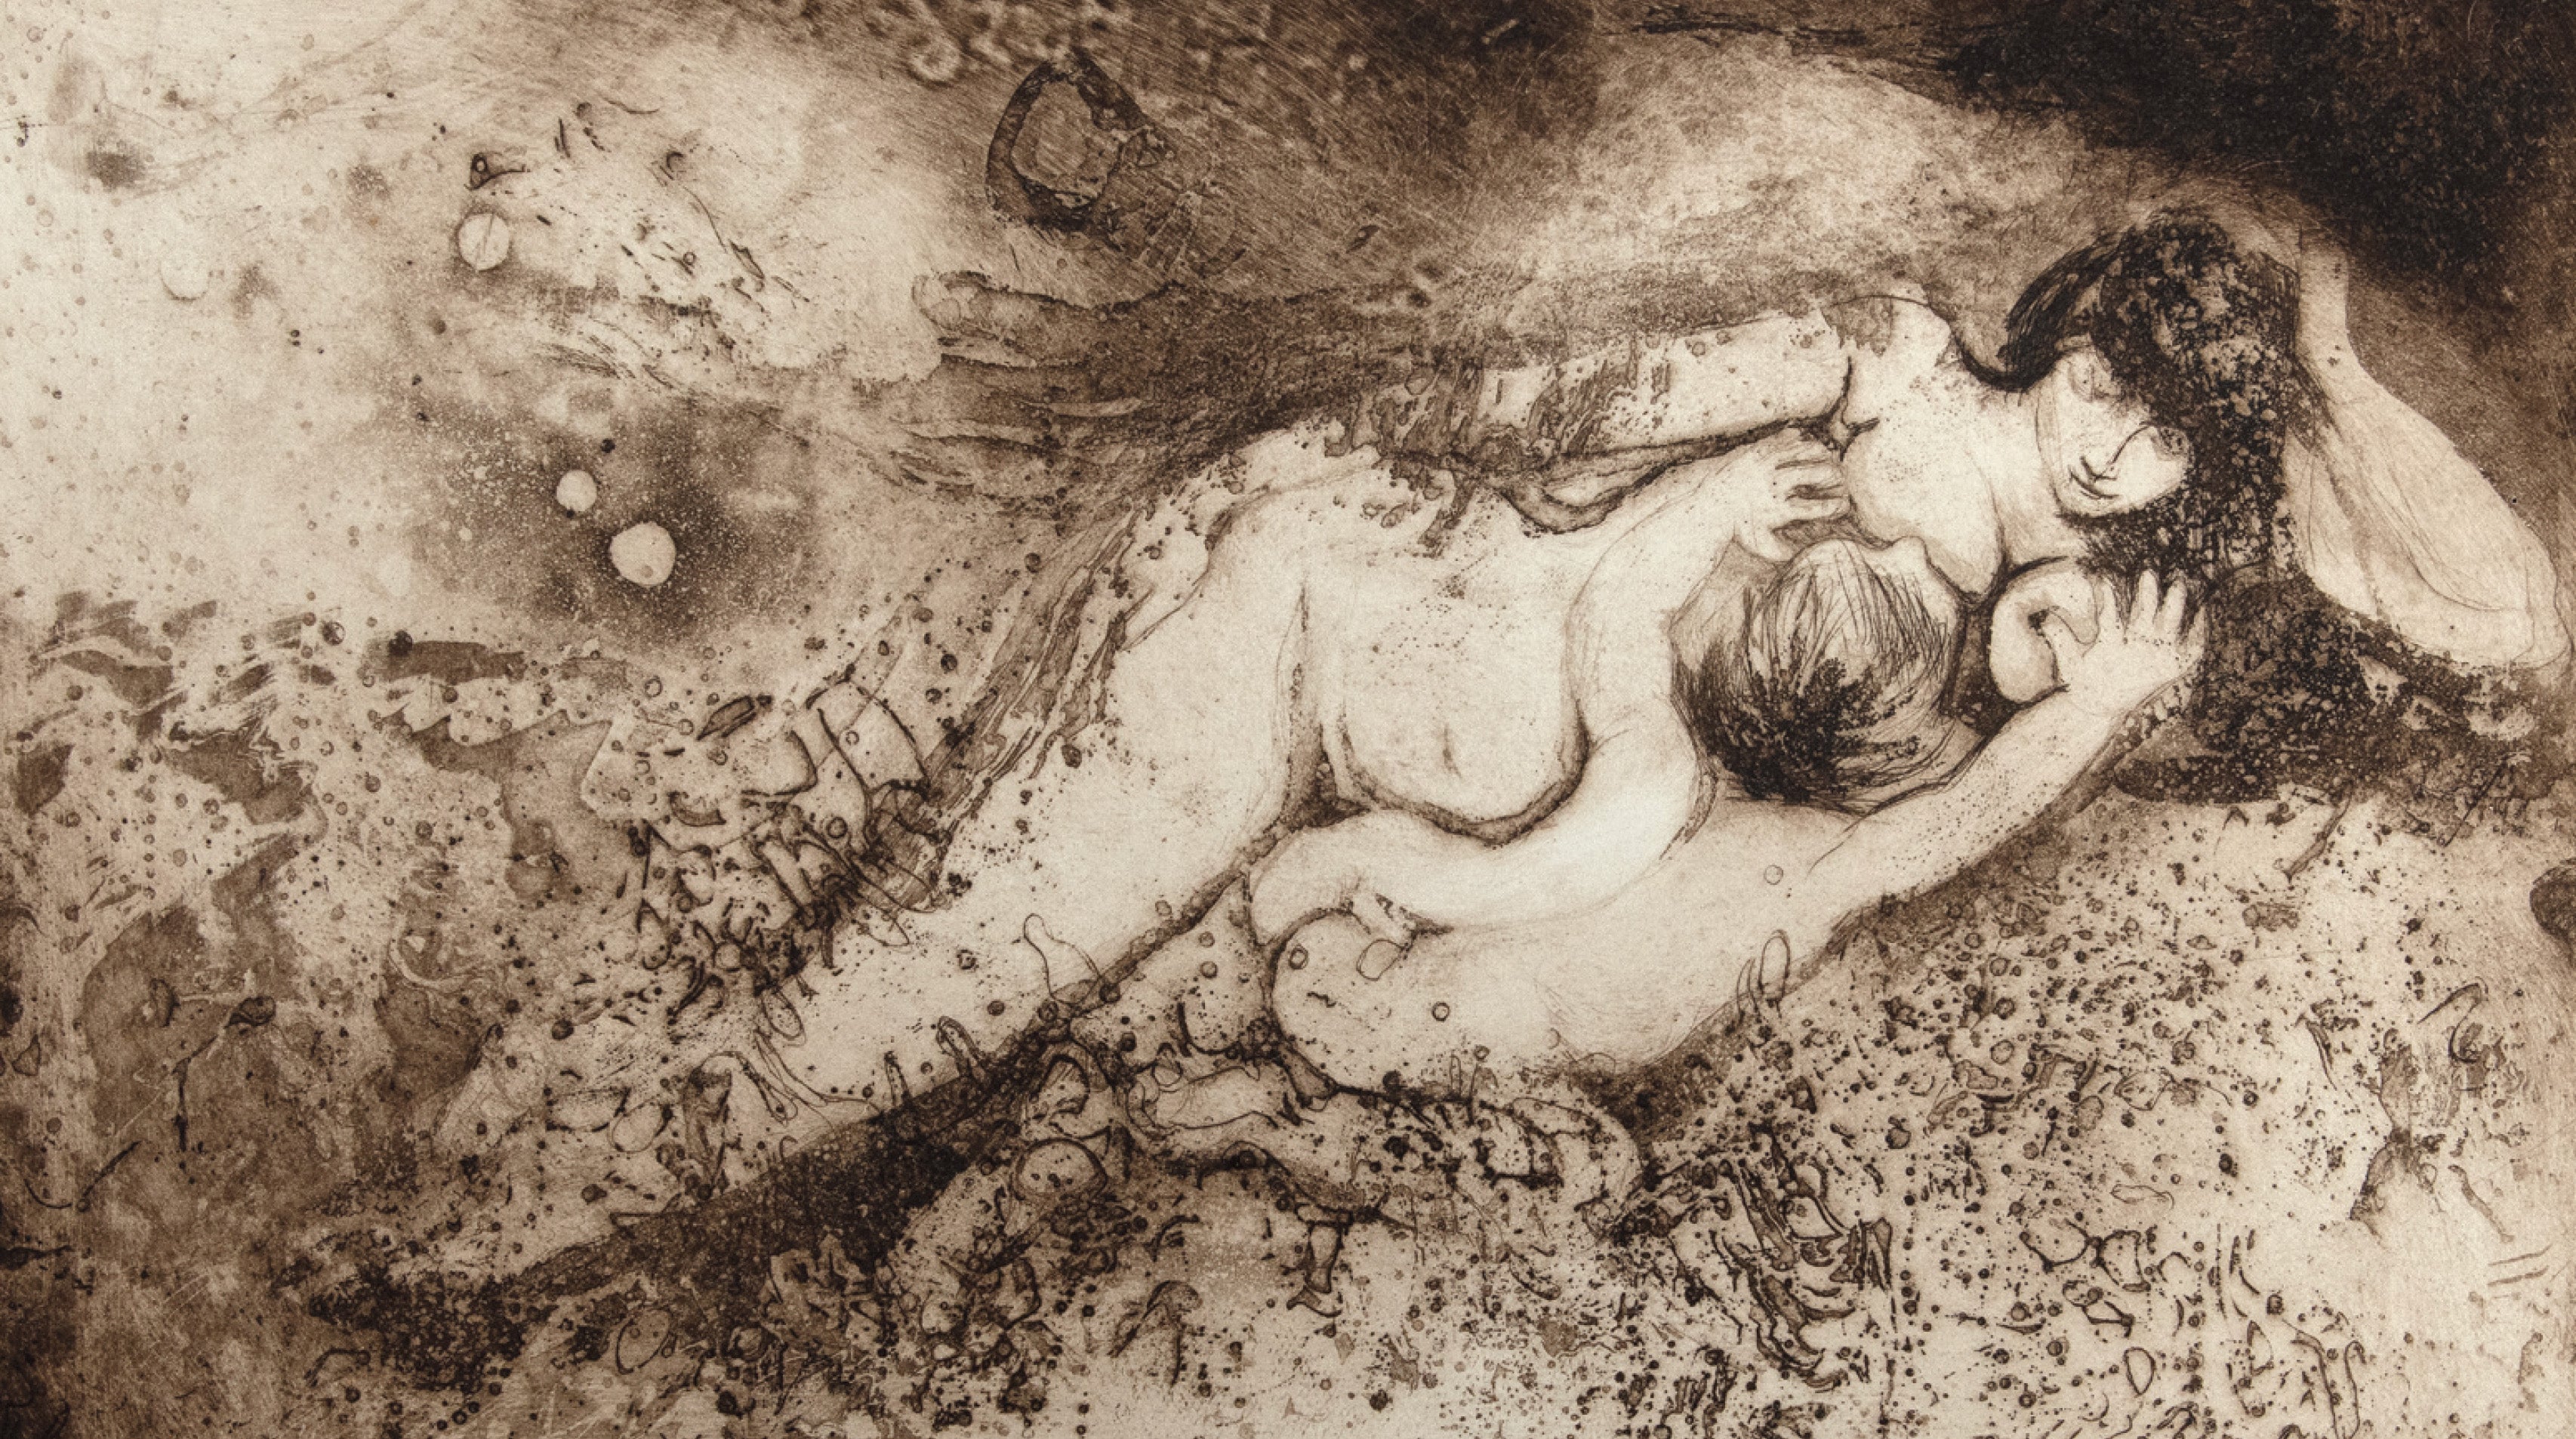 Esther Peretz-Arad, Nurturing Mother and Child, etching & aquatint